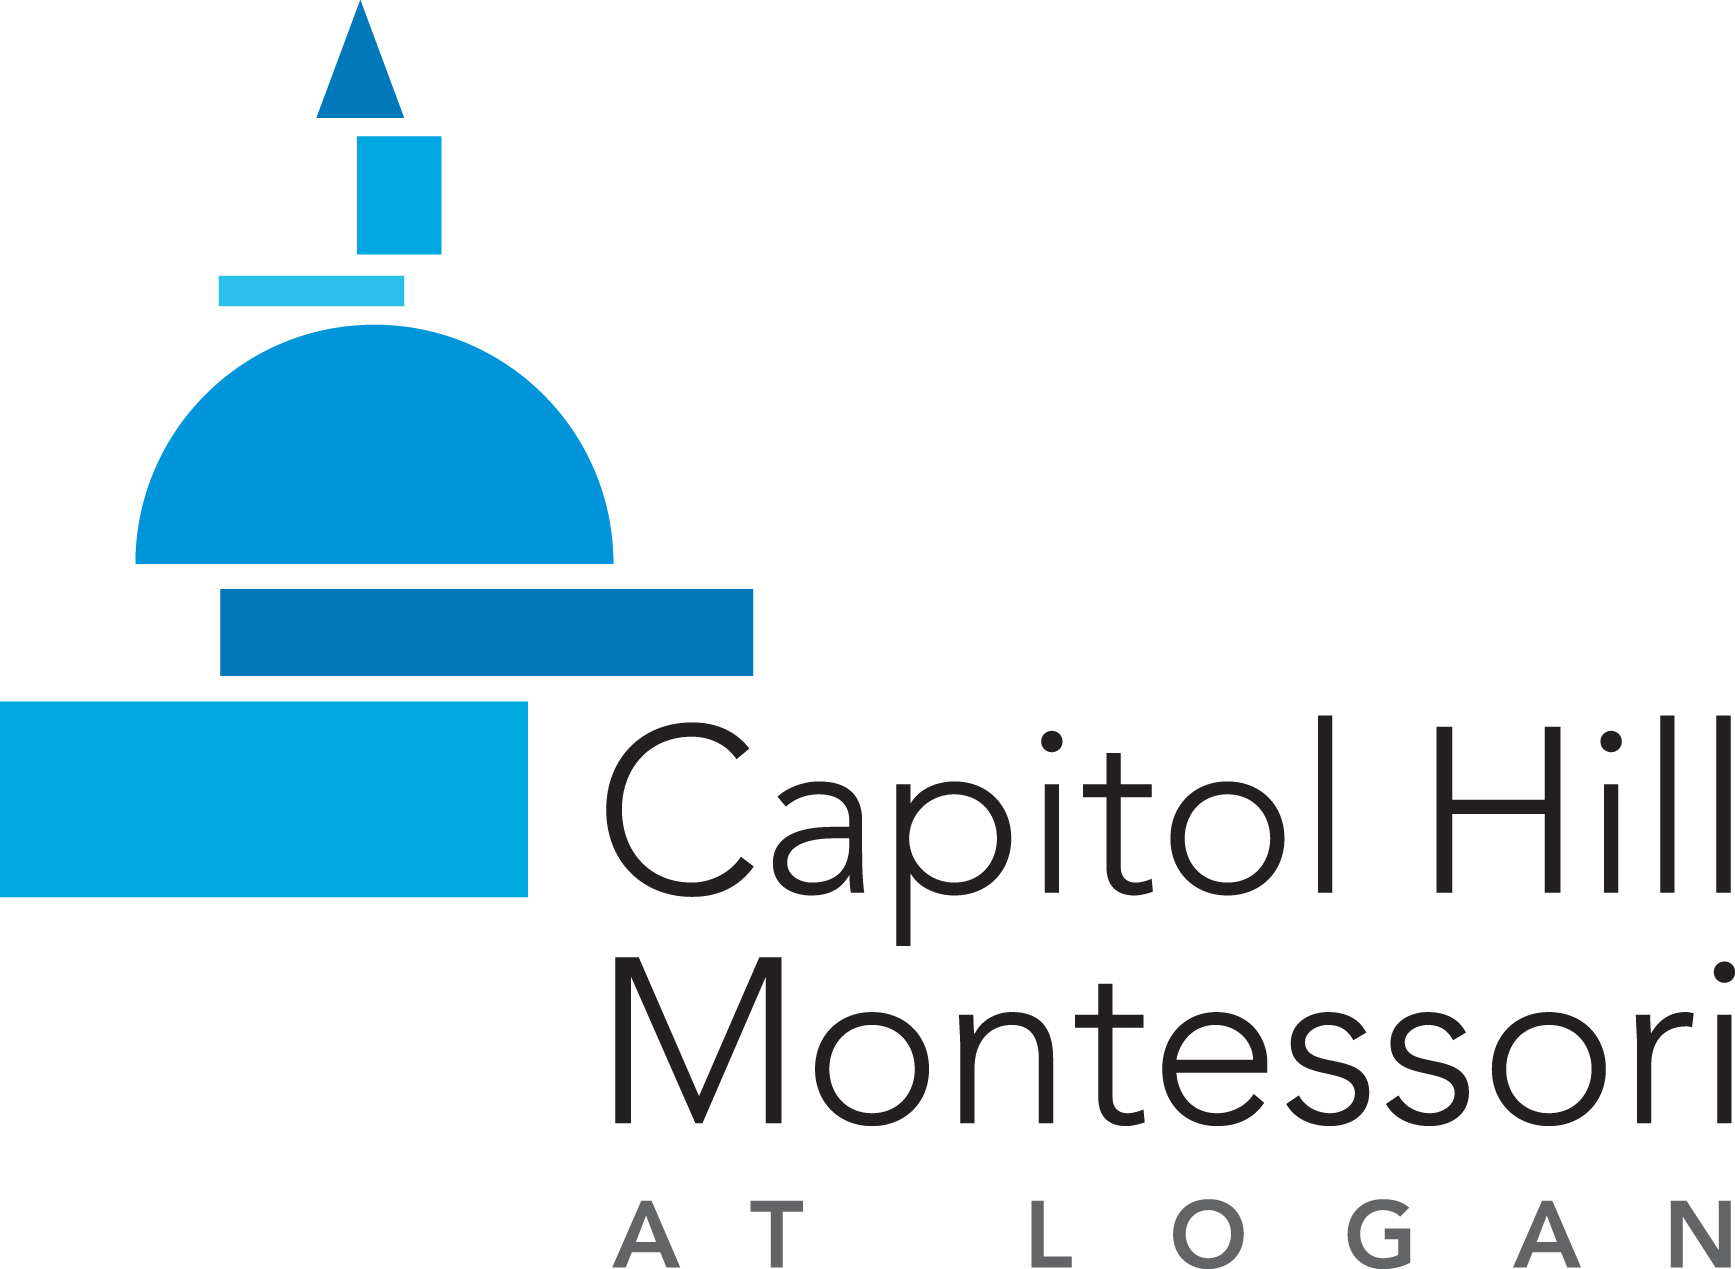 Capitol Hill Montessori at Logan